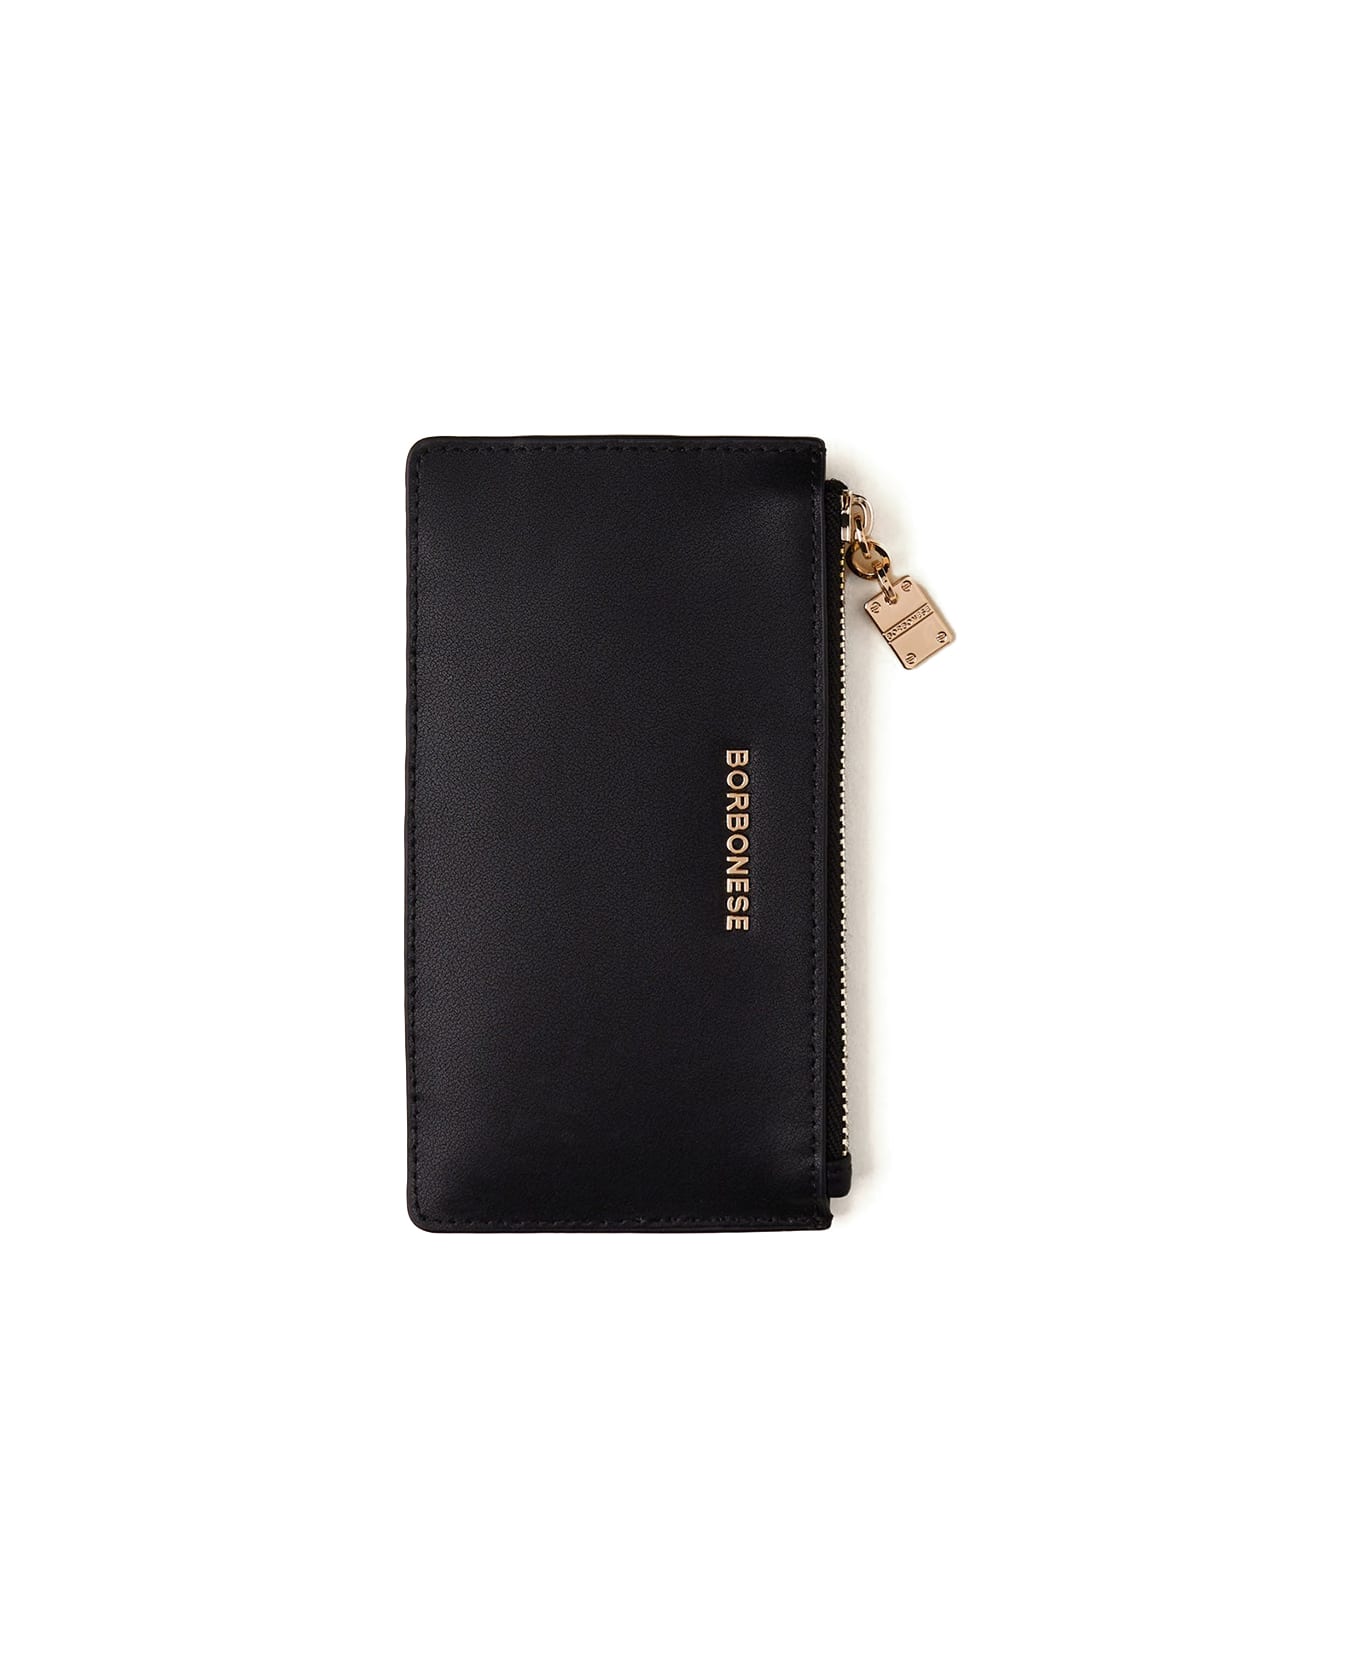 Borbonese Medium Black Leather Card Holder - NERO 財布